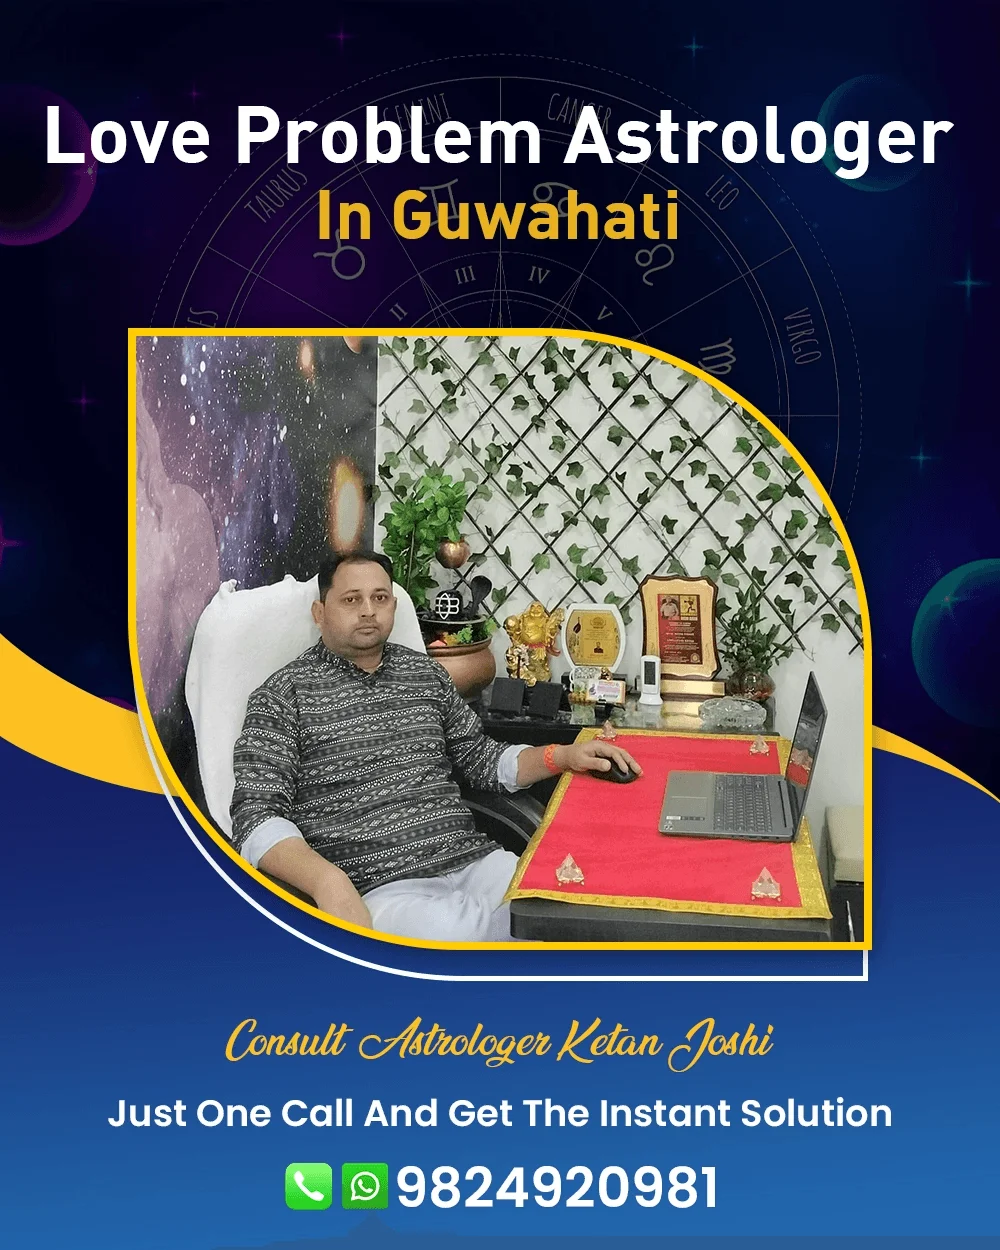 Love Problem Astrologer In Guwahati